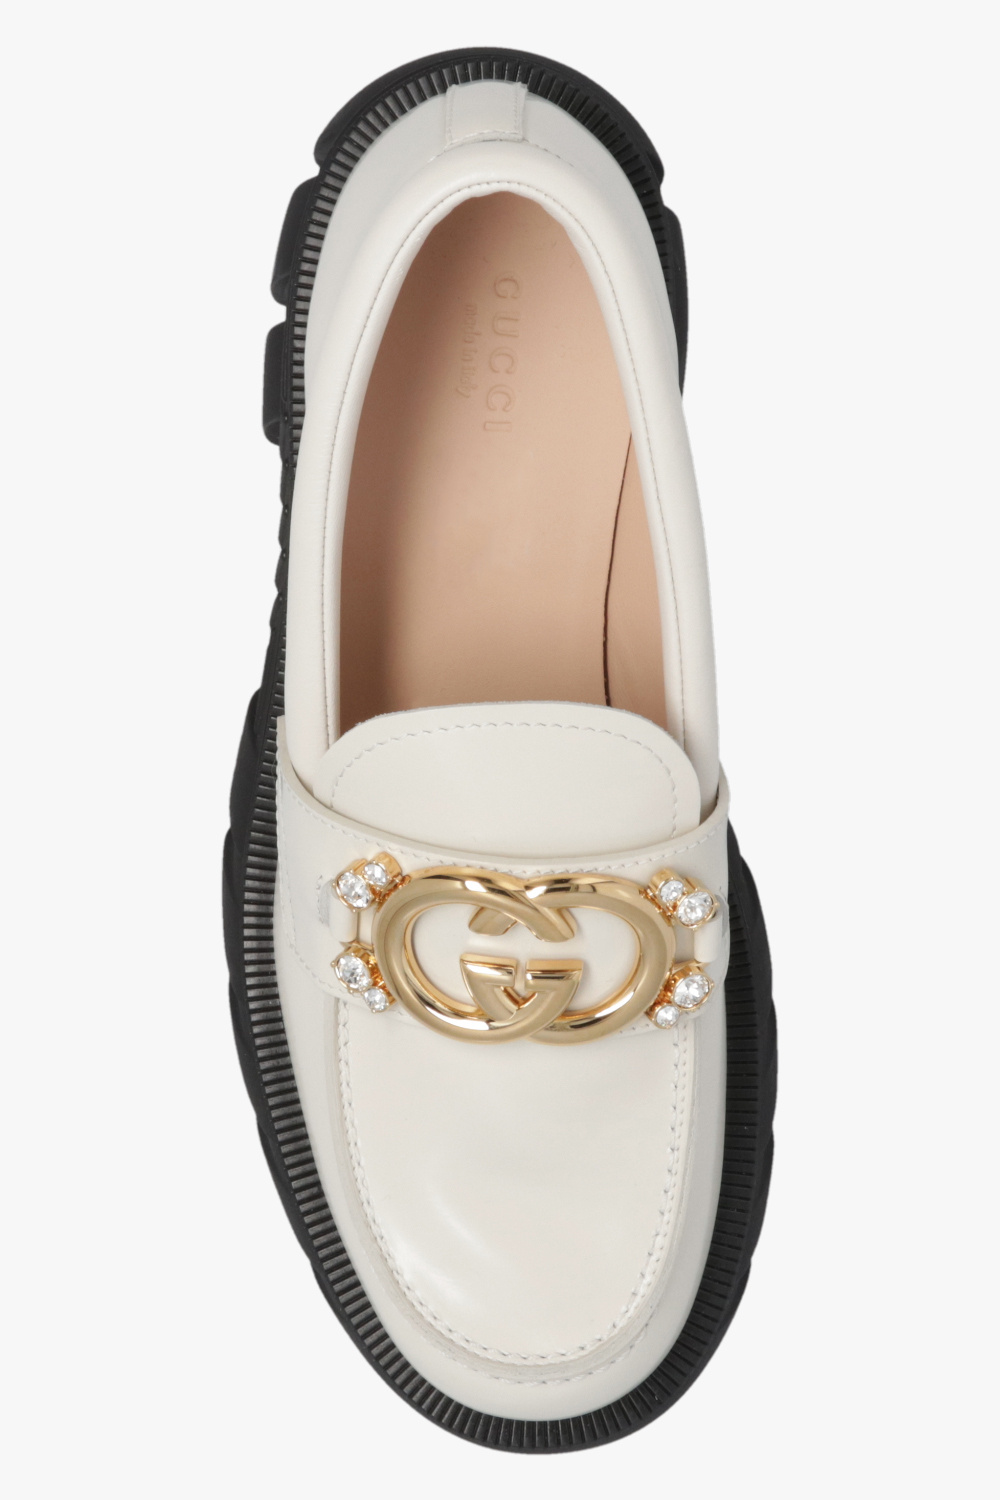 Gucci TEEN rose print platform sandals